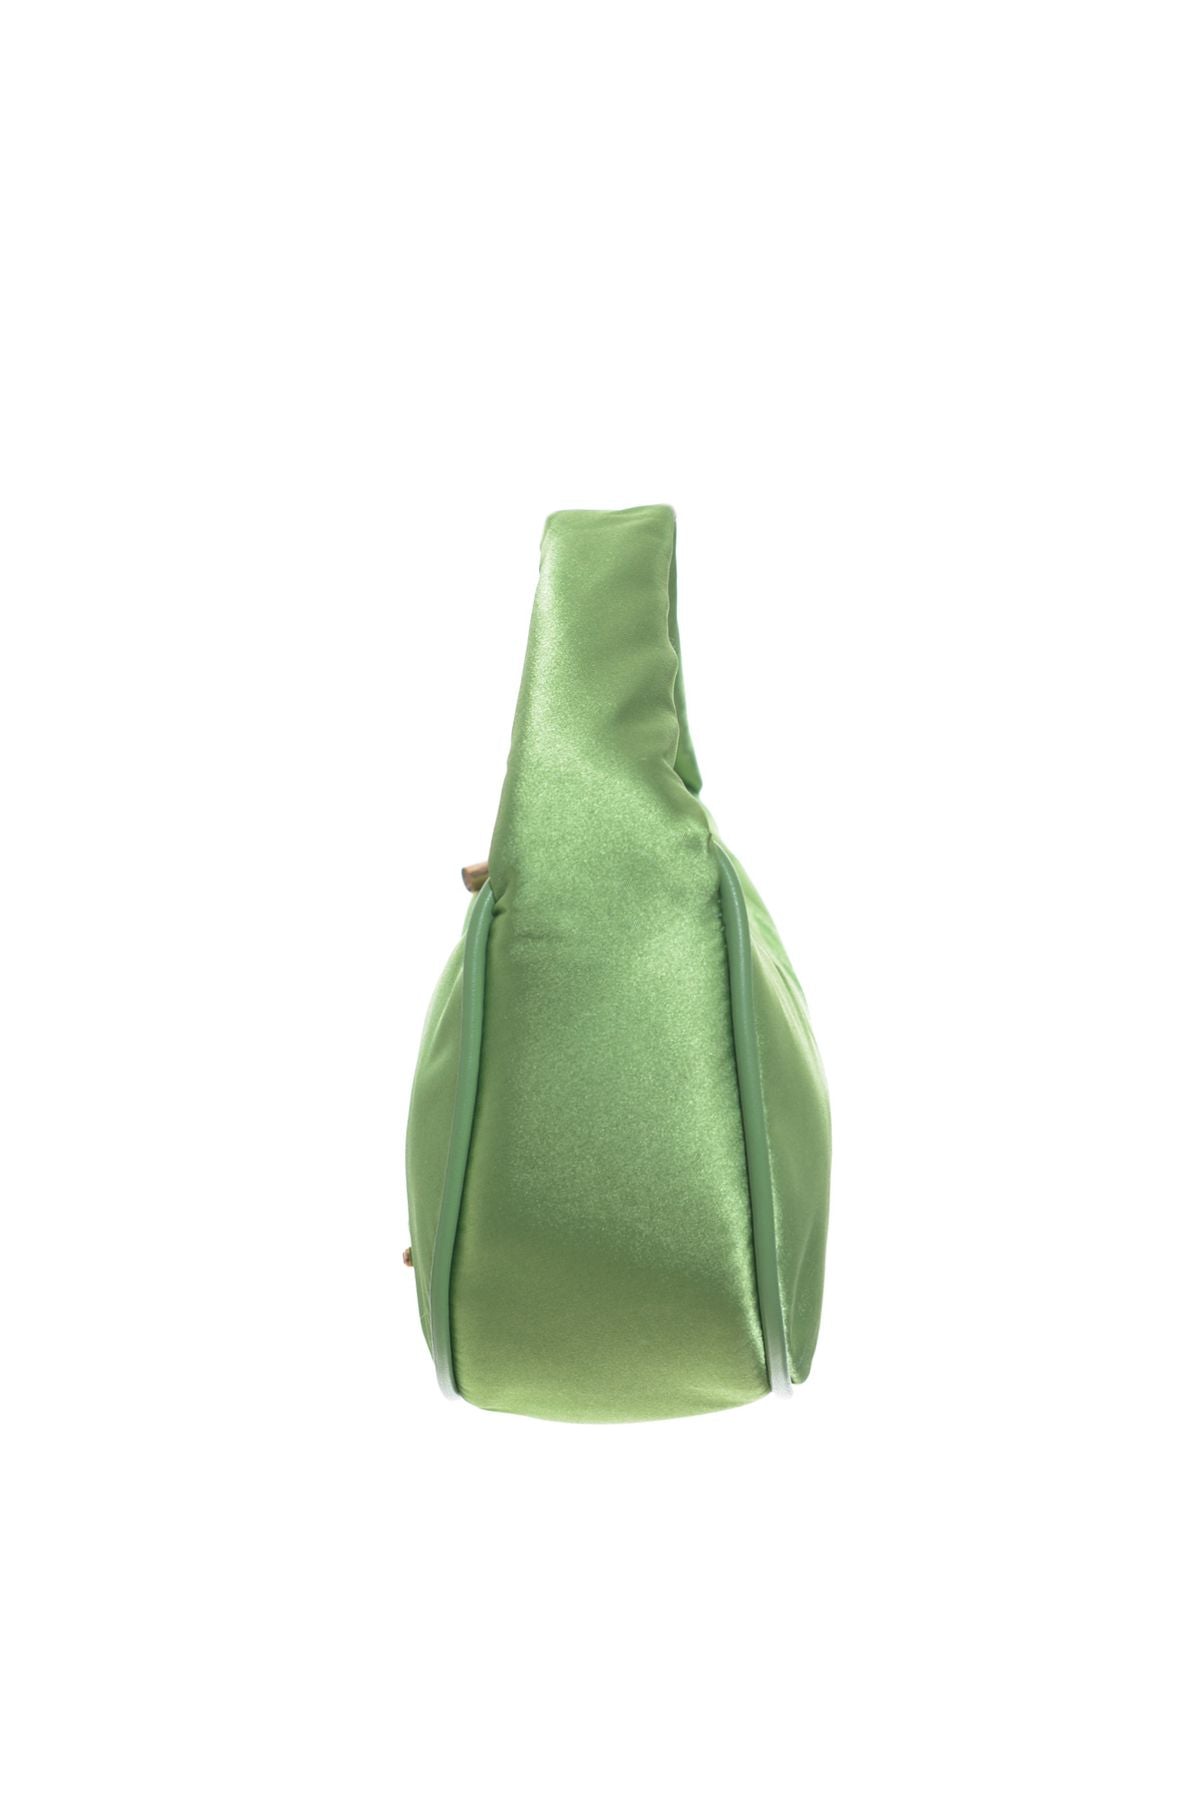 LIU.JO Spring/Summer Polyester Bags